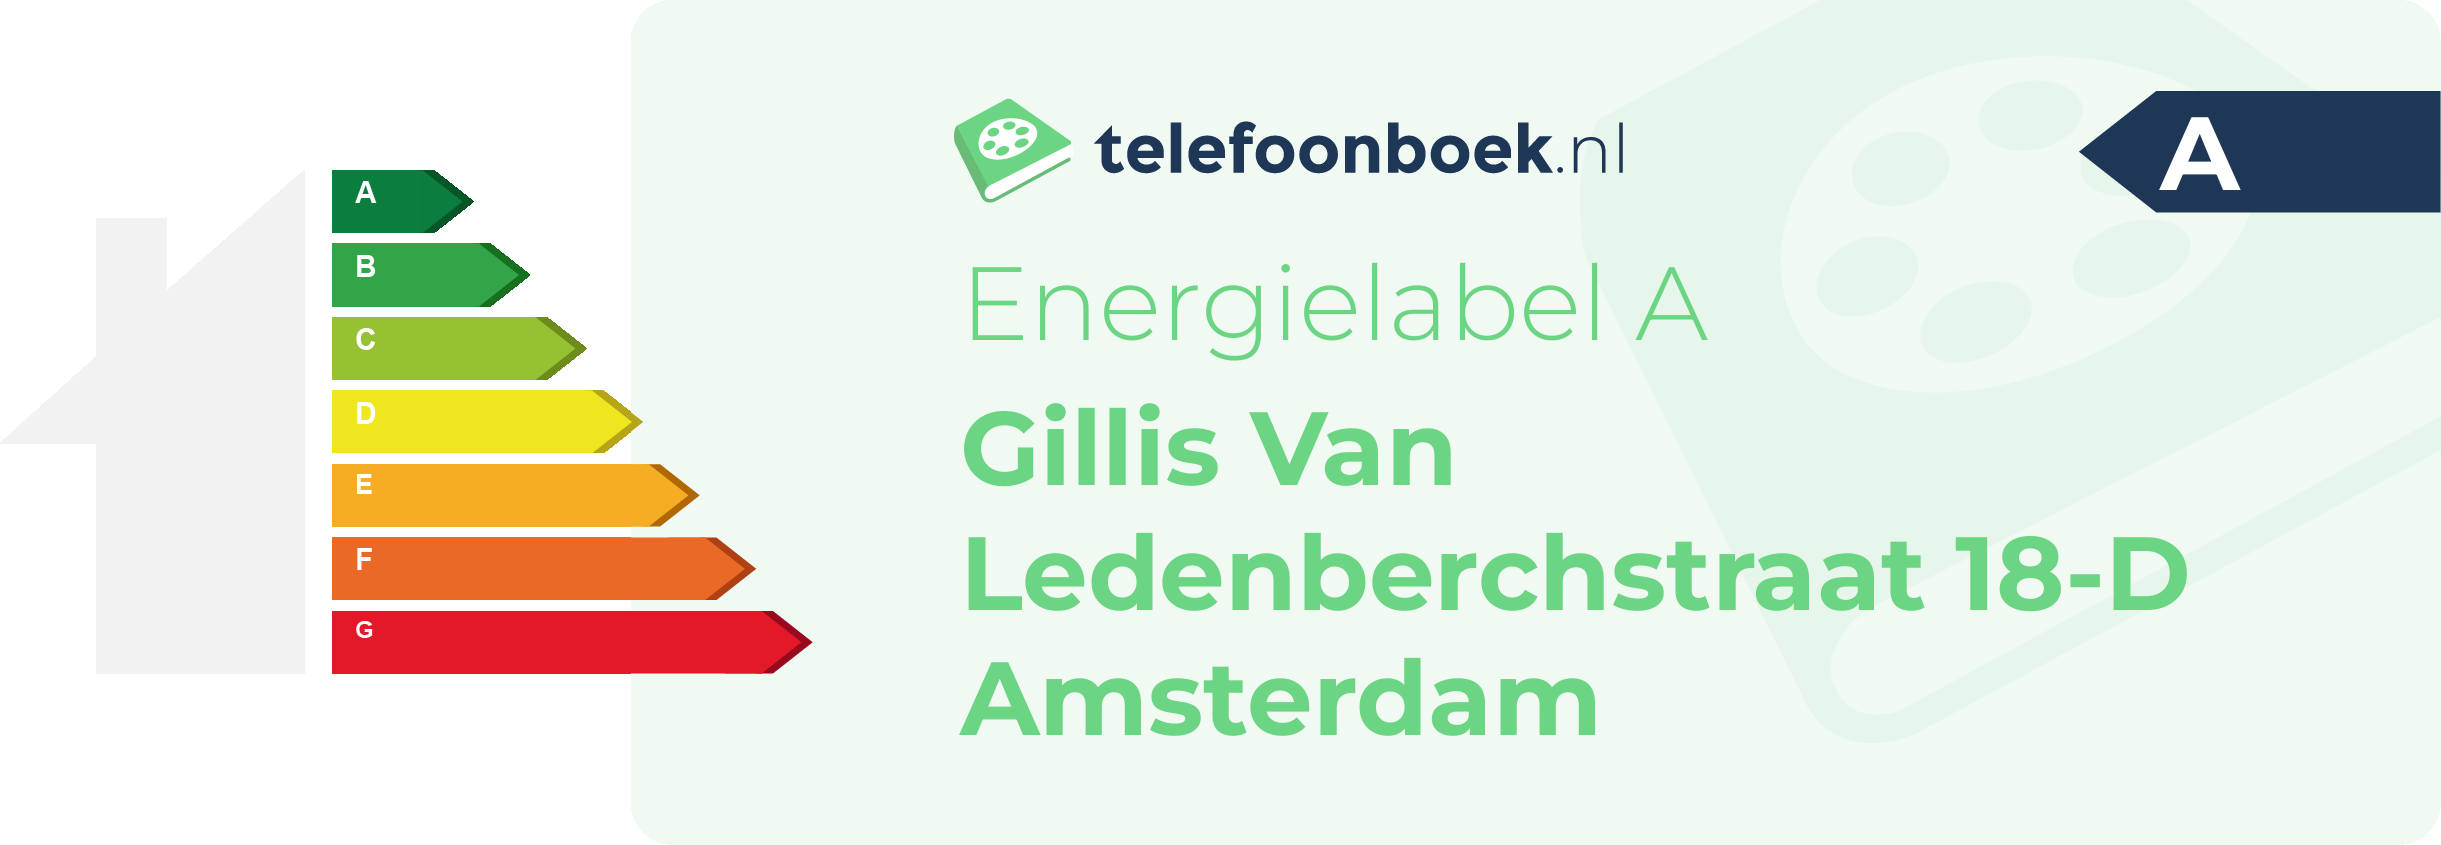 Energielabel Gillis Van Ledenberchstraat 18-D Amsterdam